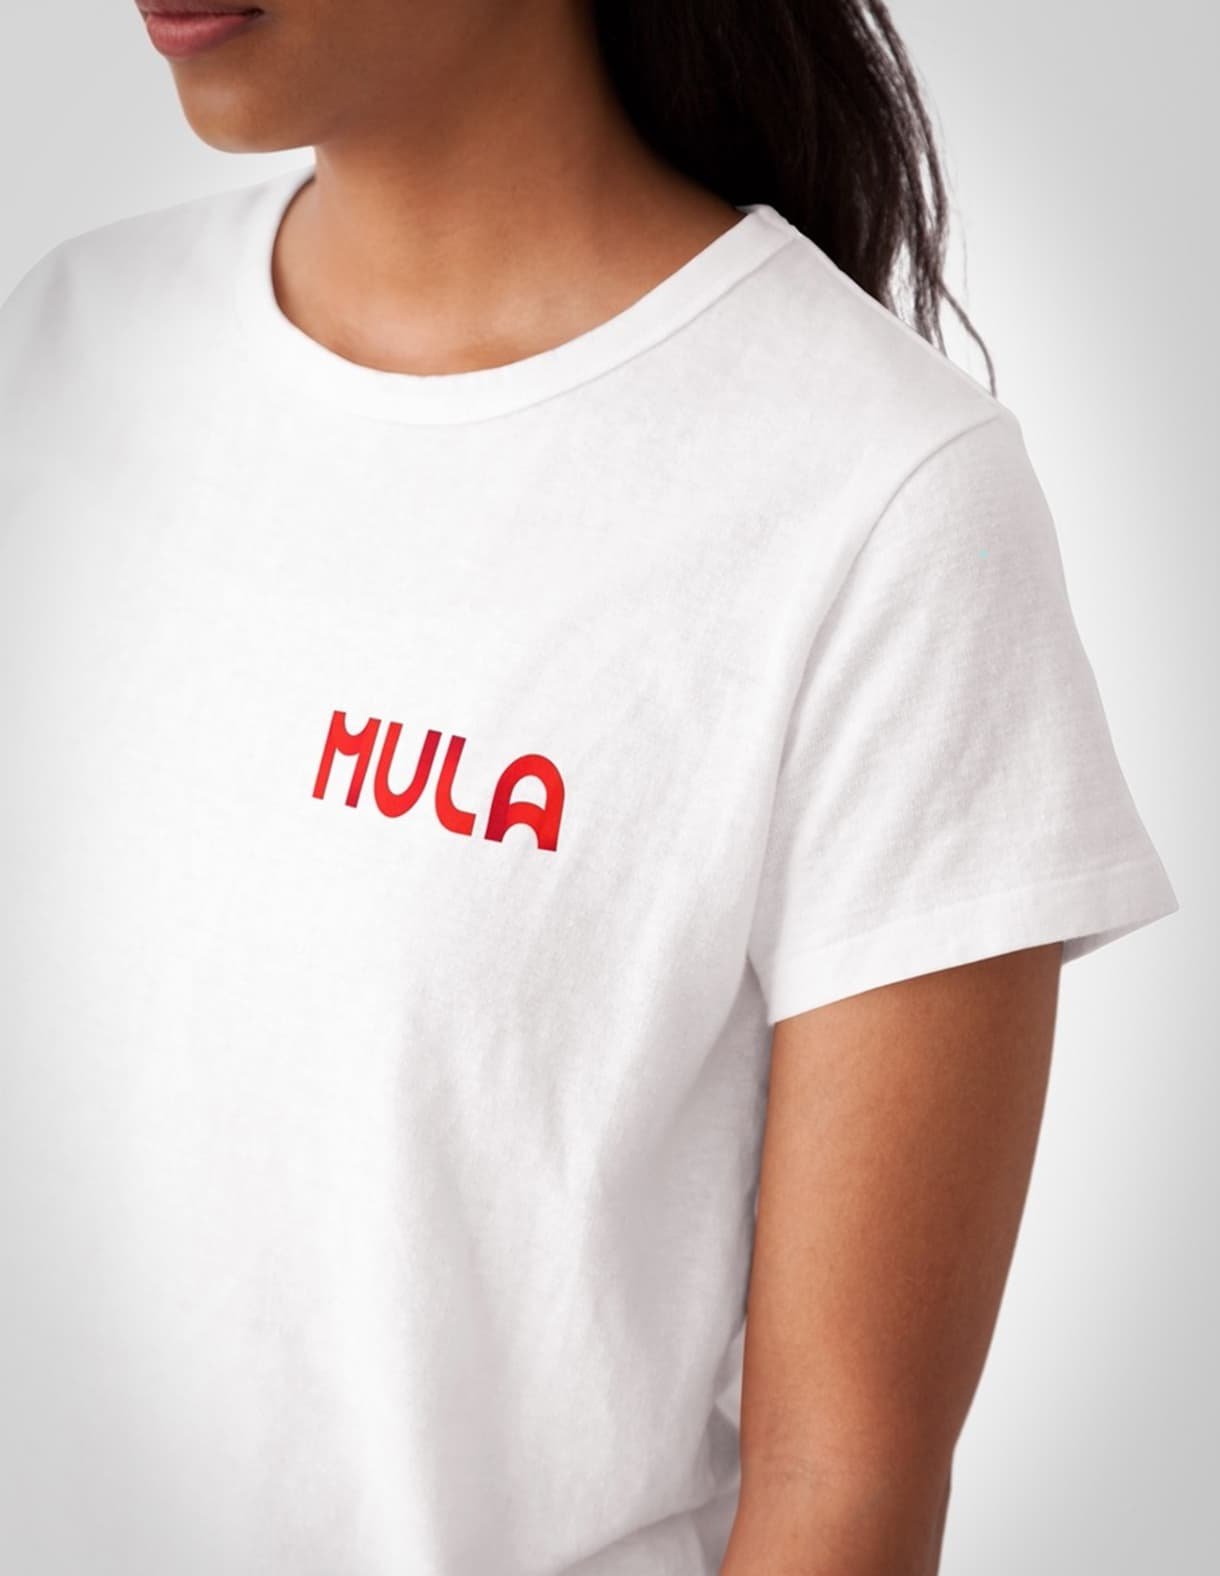 Mula shirt girl.jpg